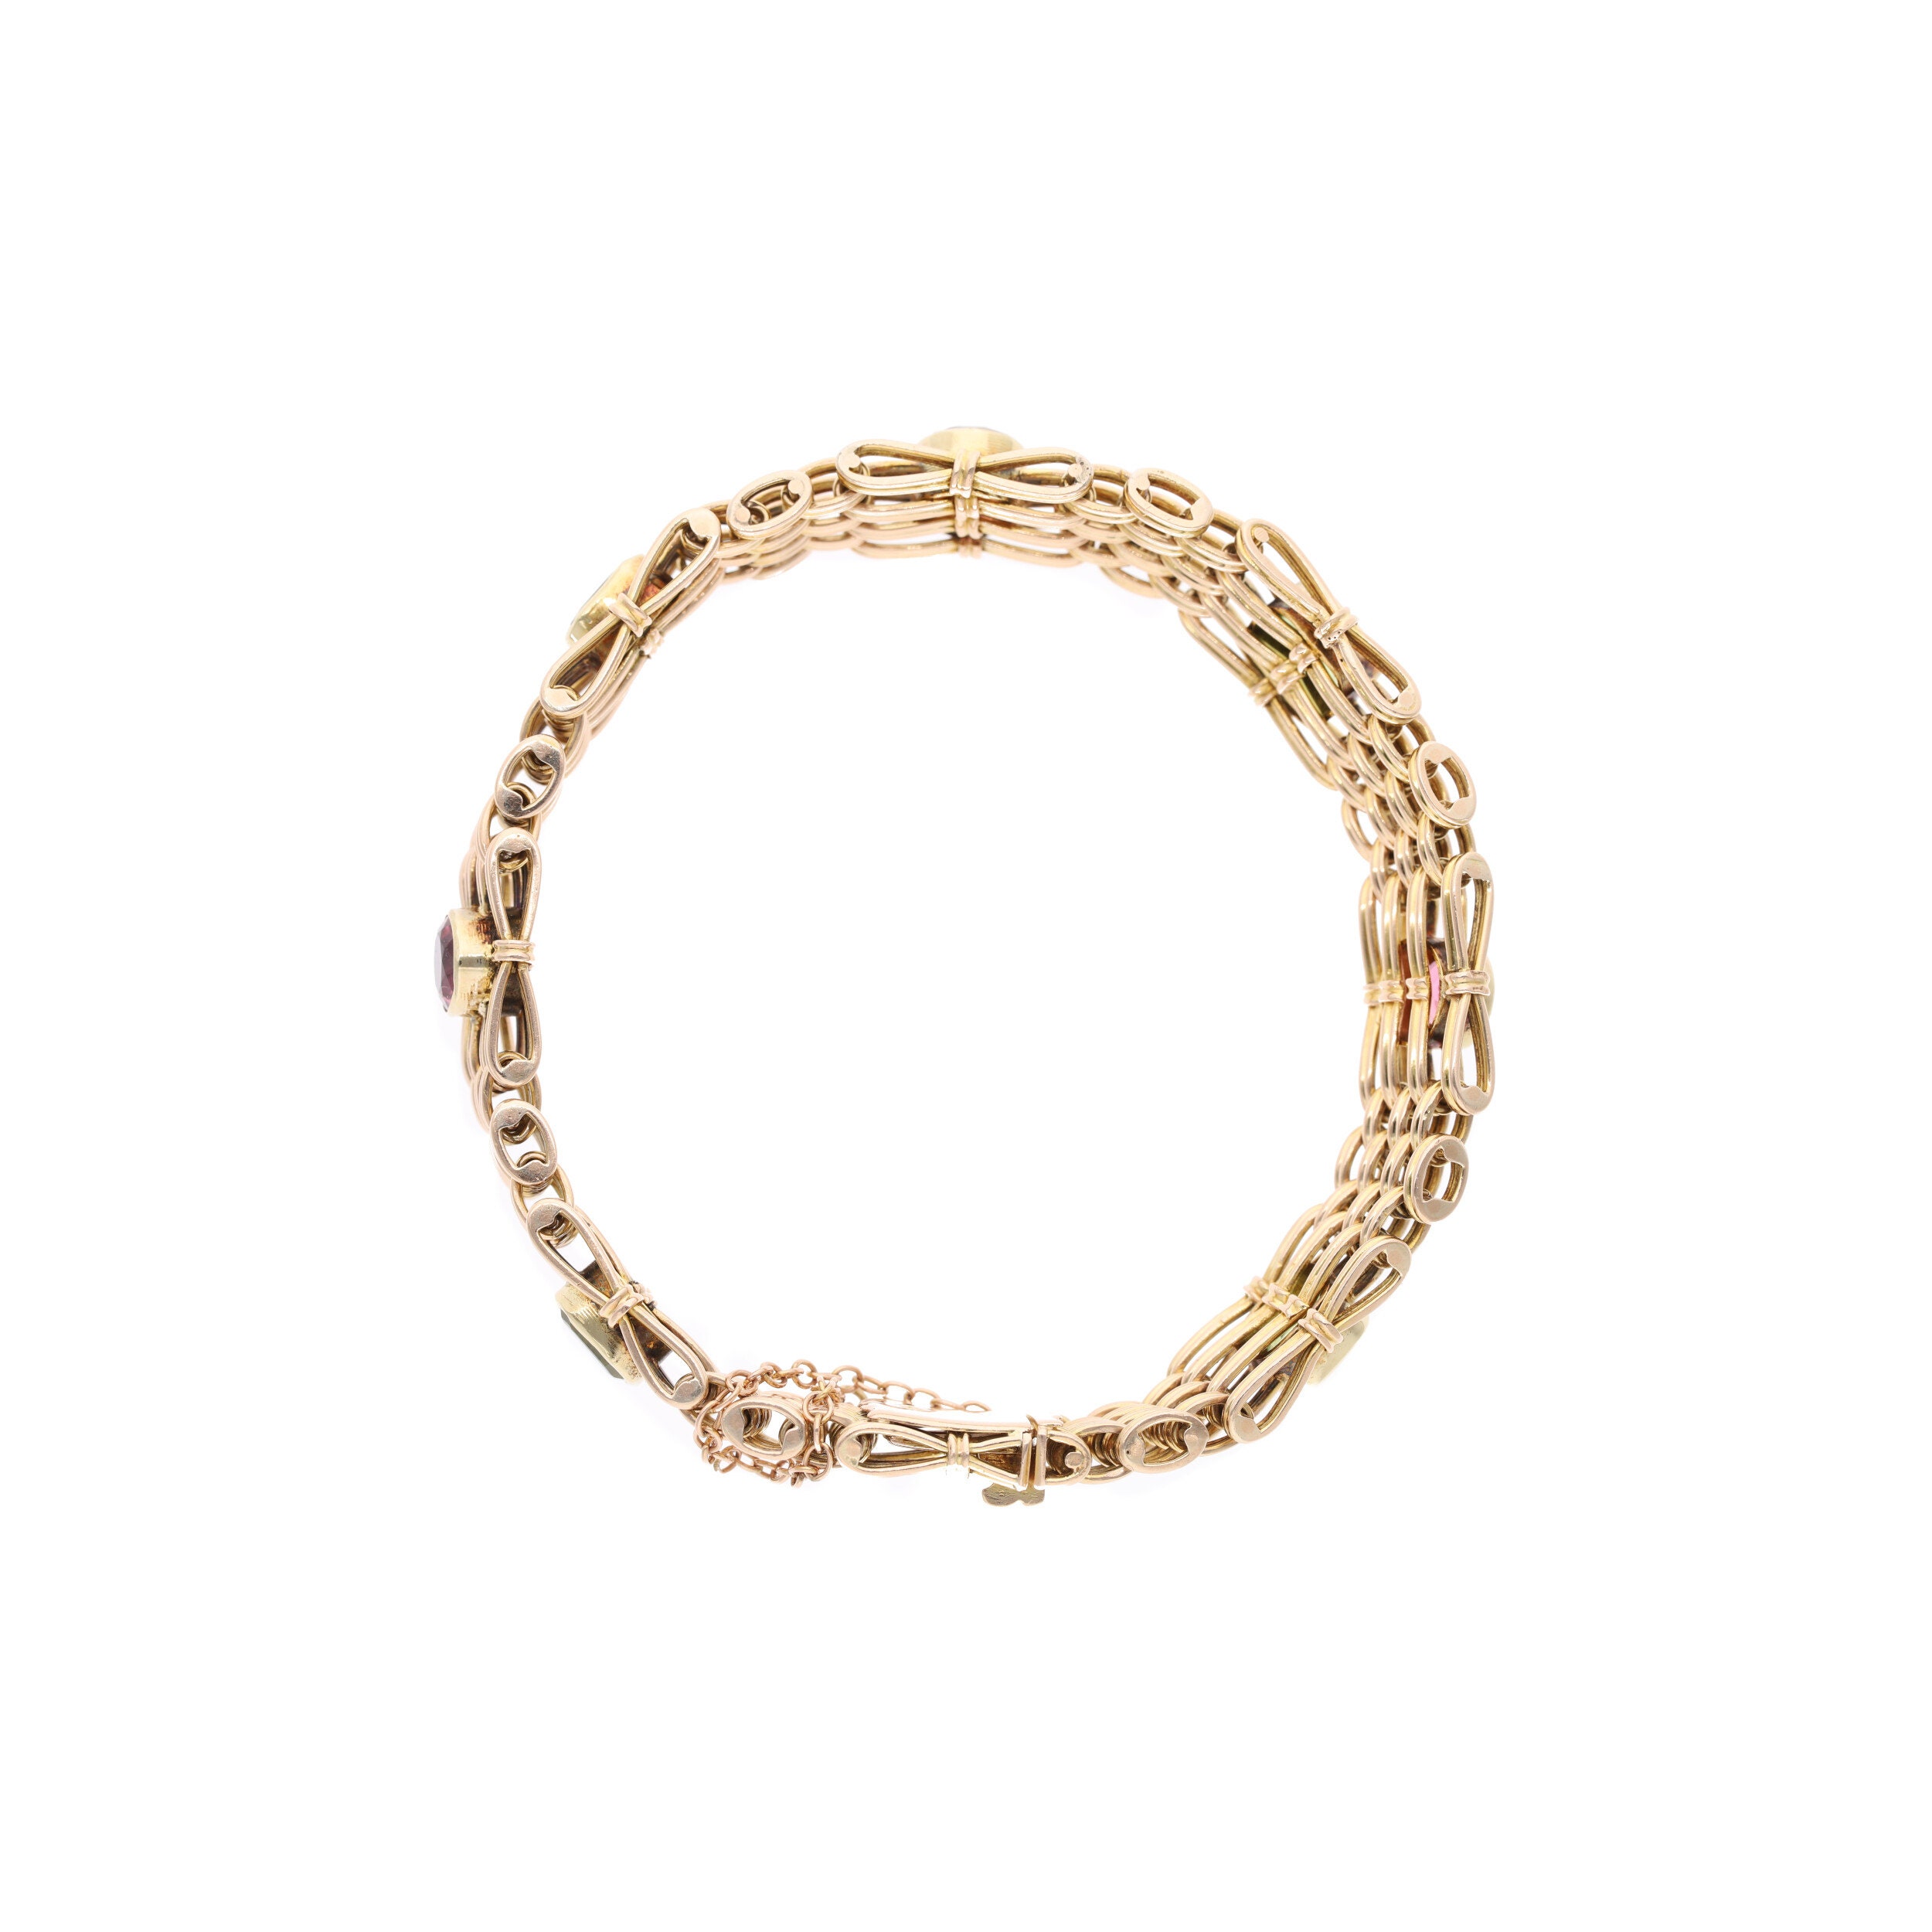 Gold Daisy Chain Bracelet with Peridot and Pink Tourmaline